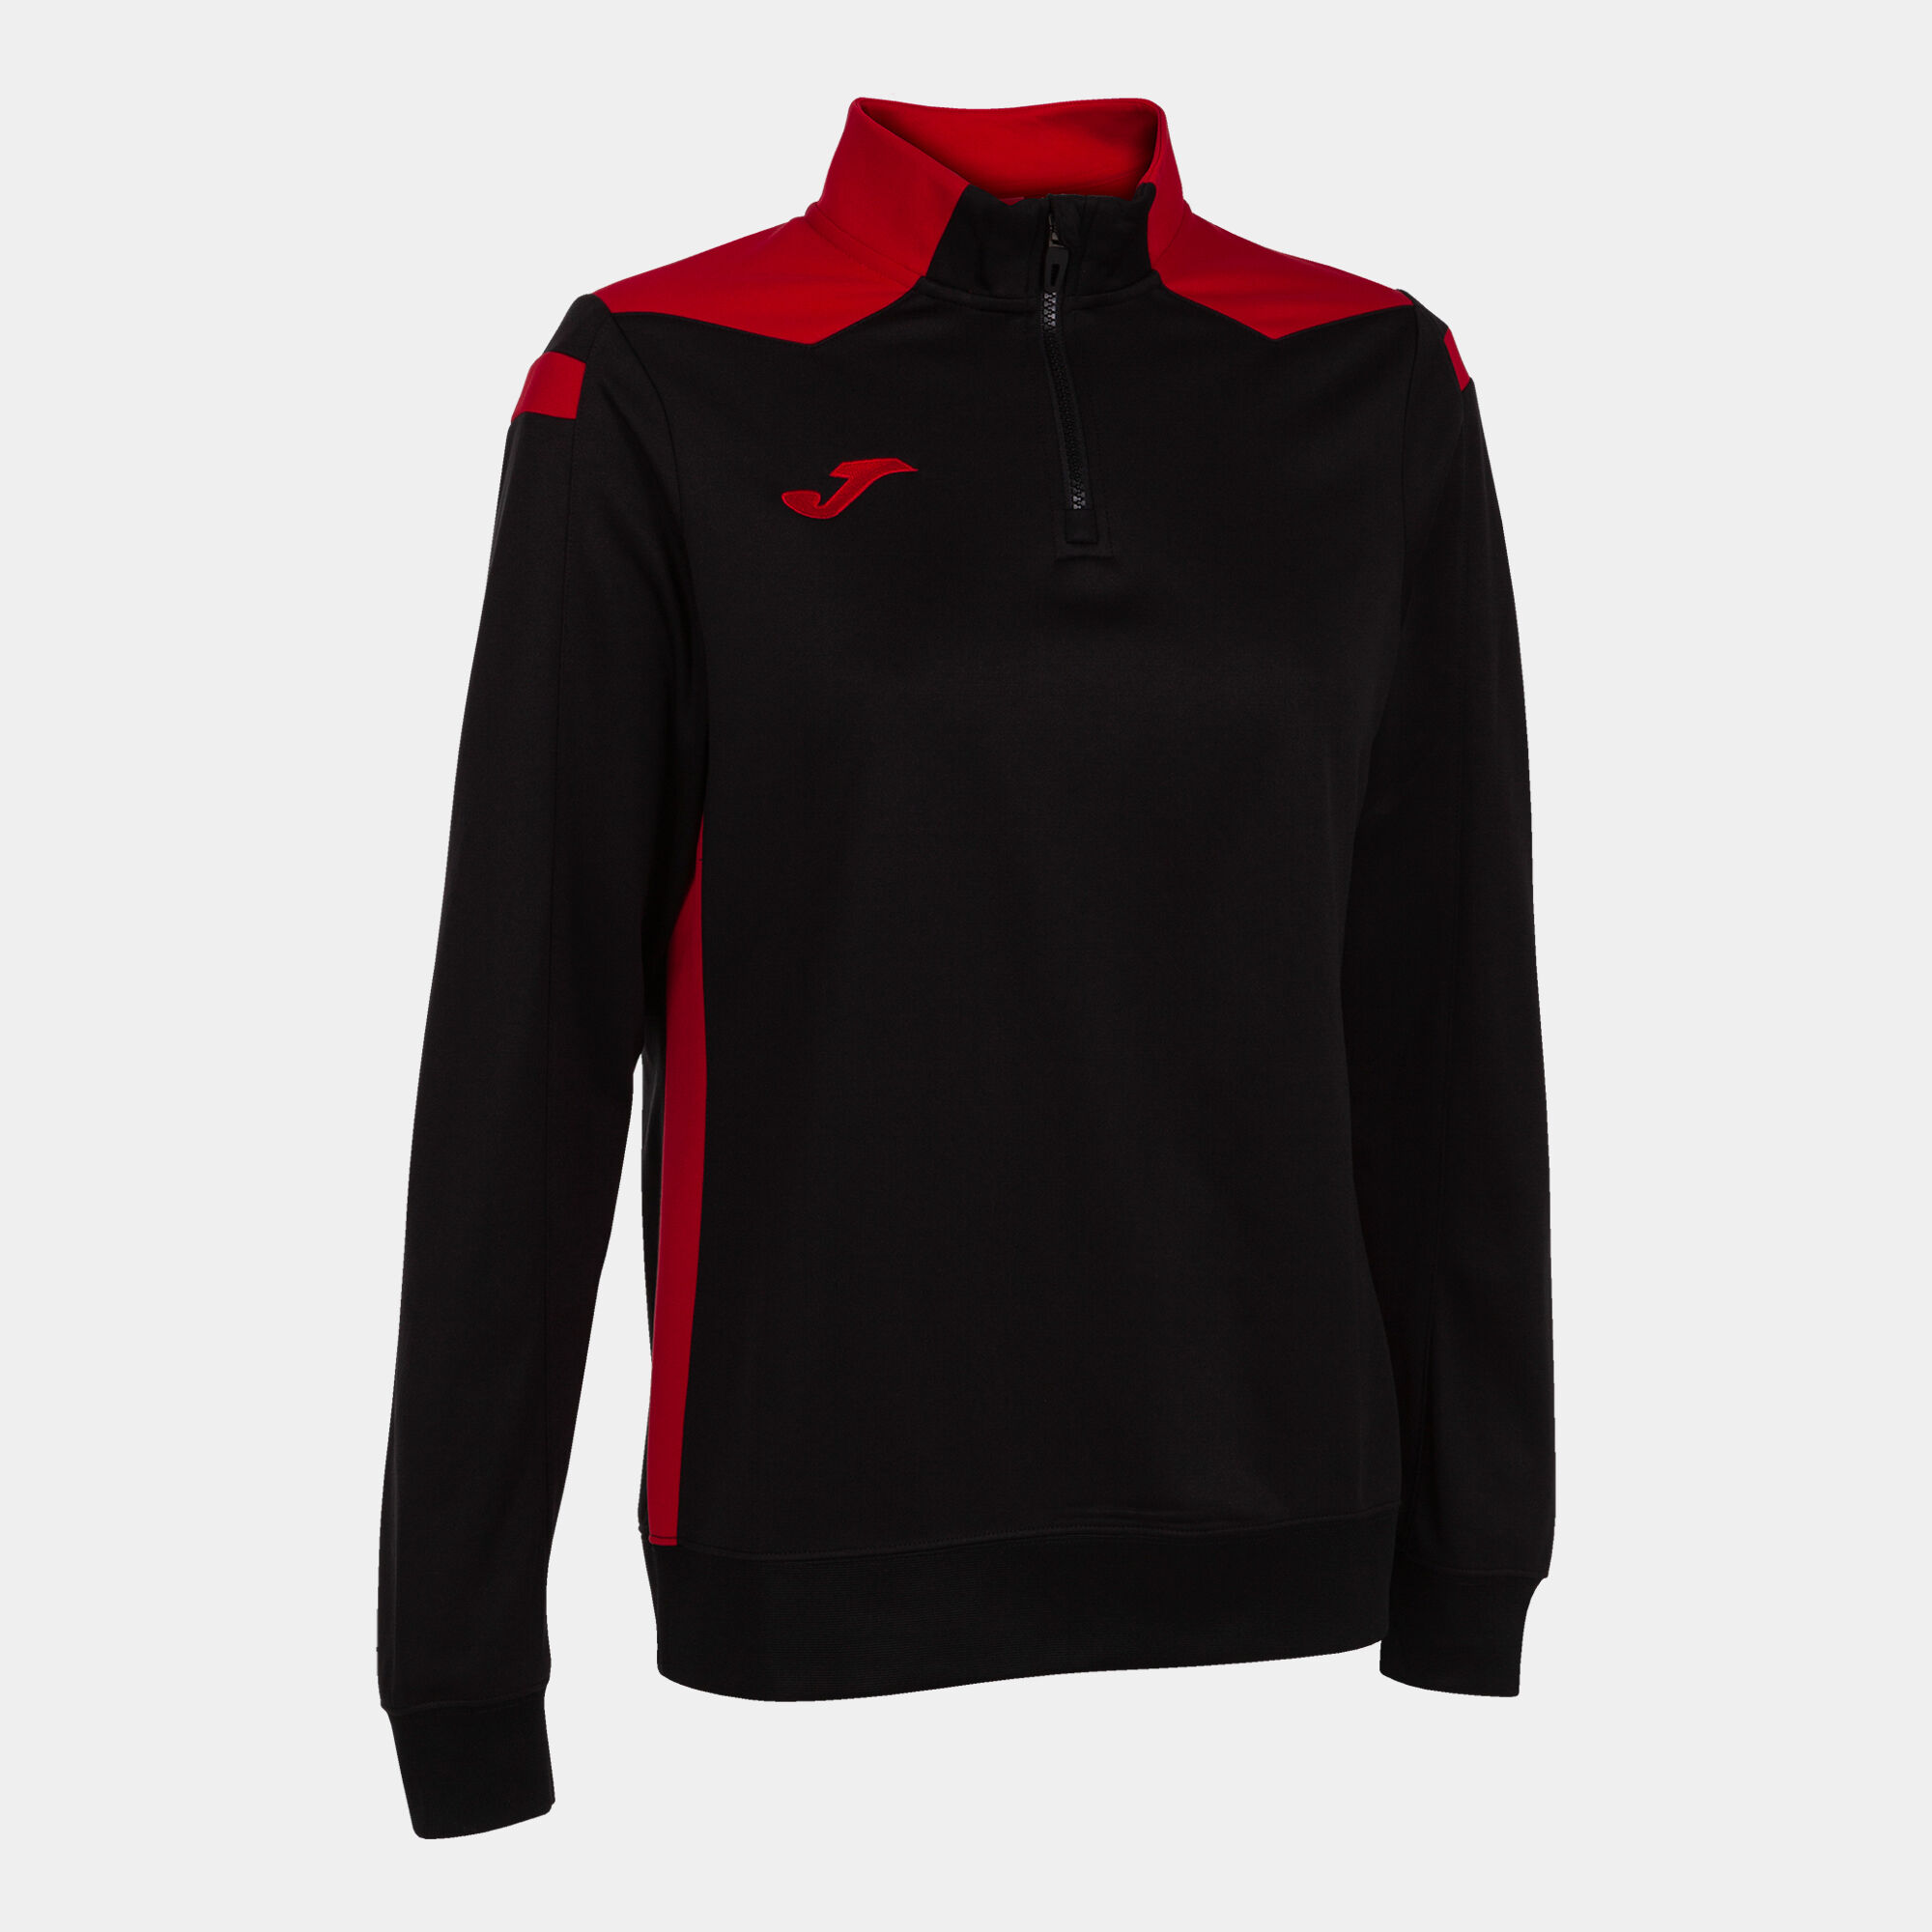 Sweatshirt woman Championship VI black red